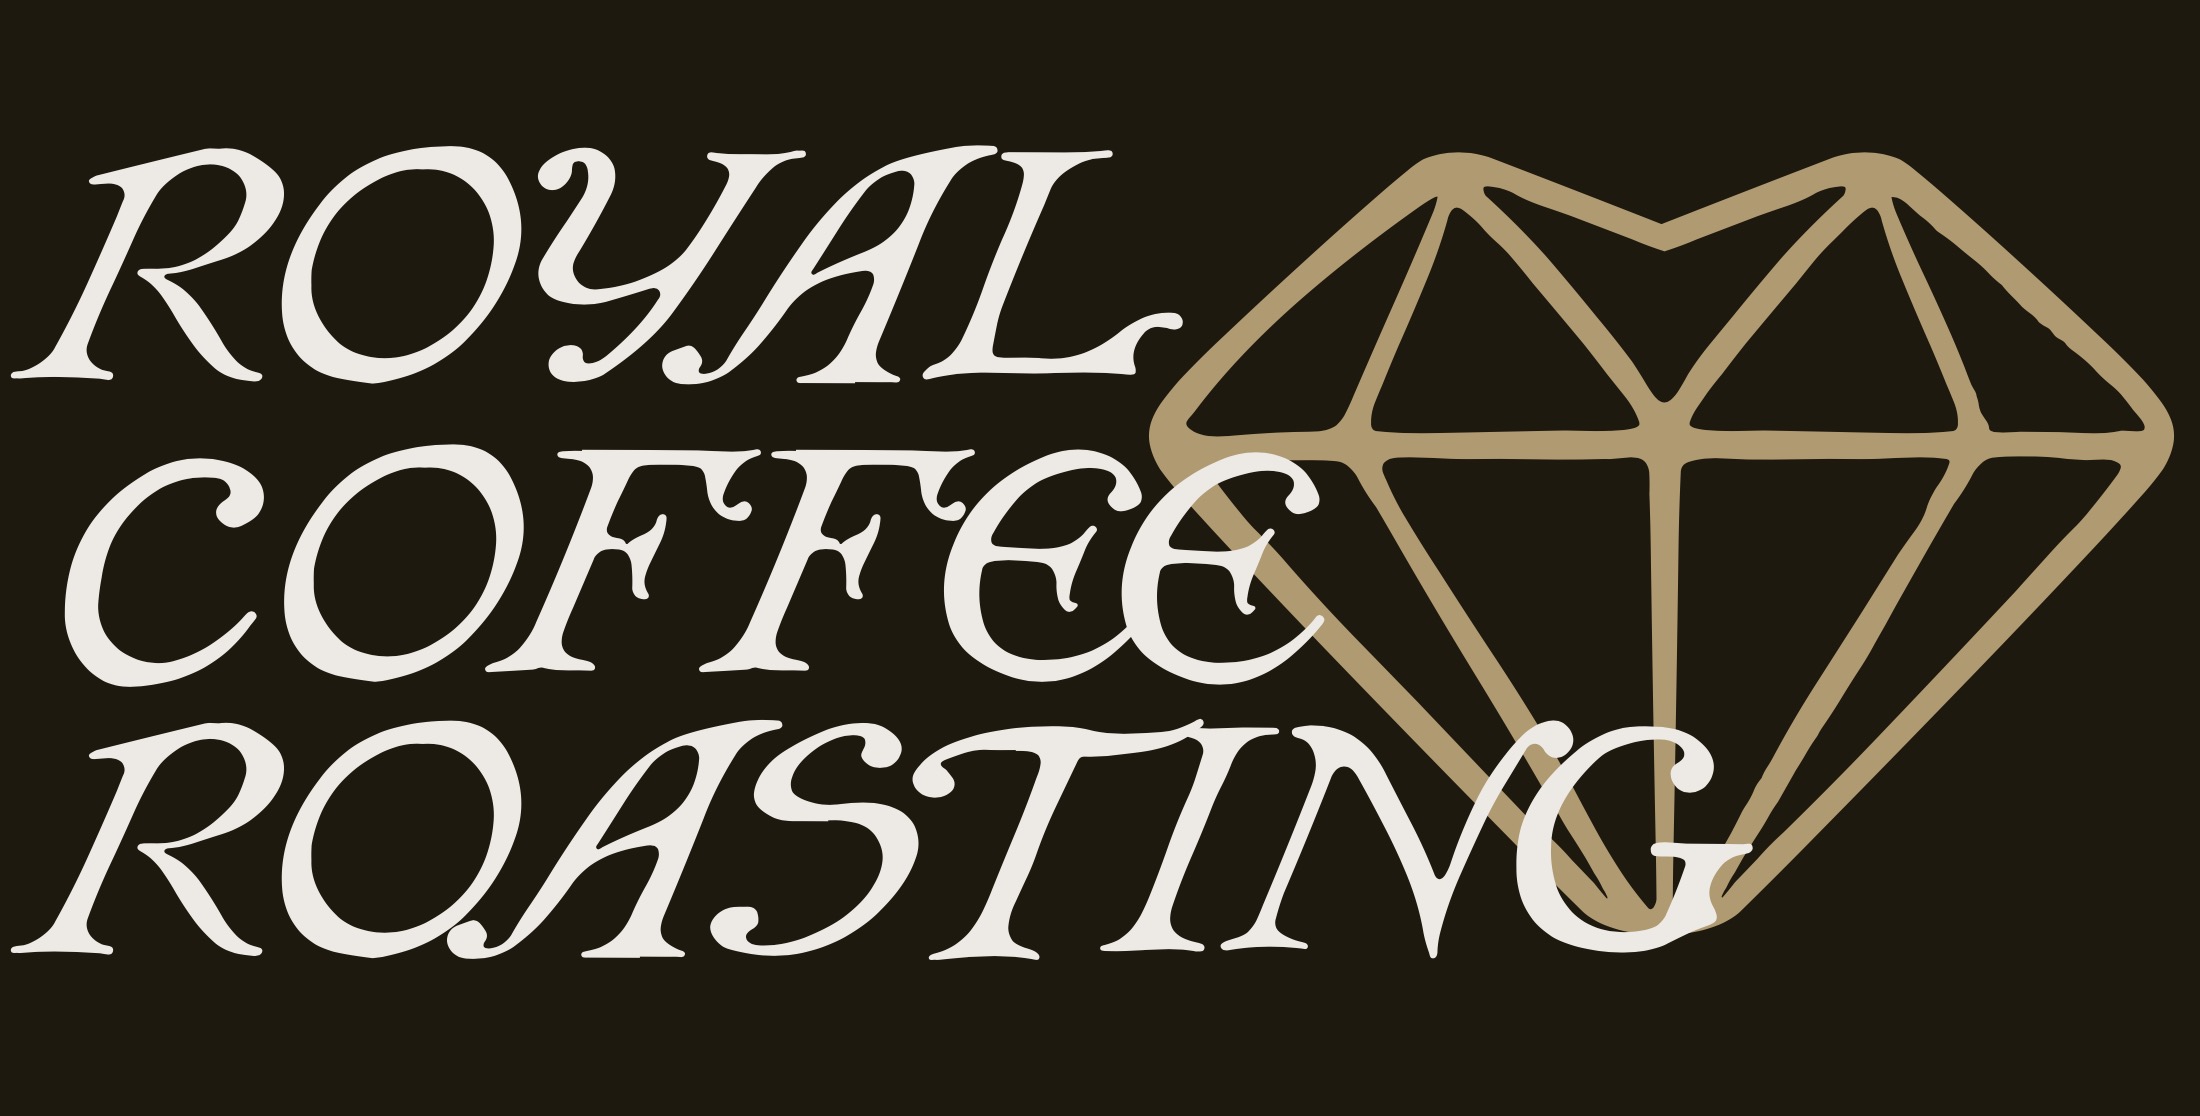 Royal Coffee Roasting